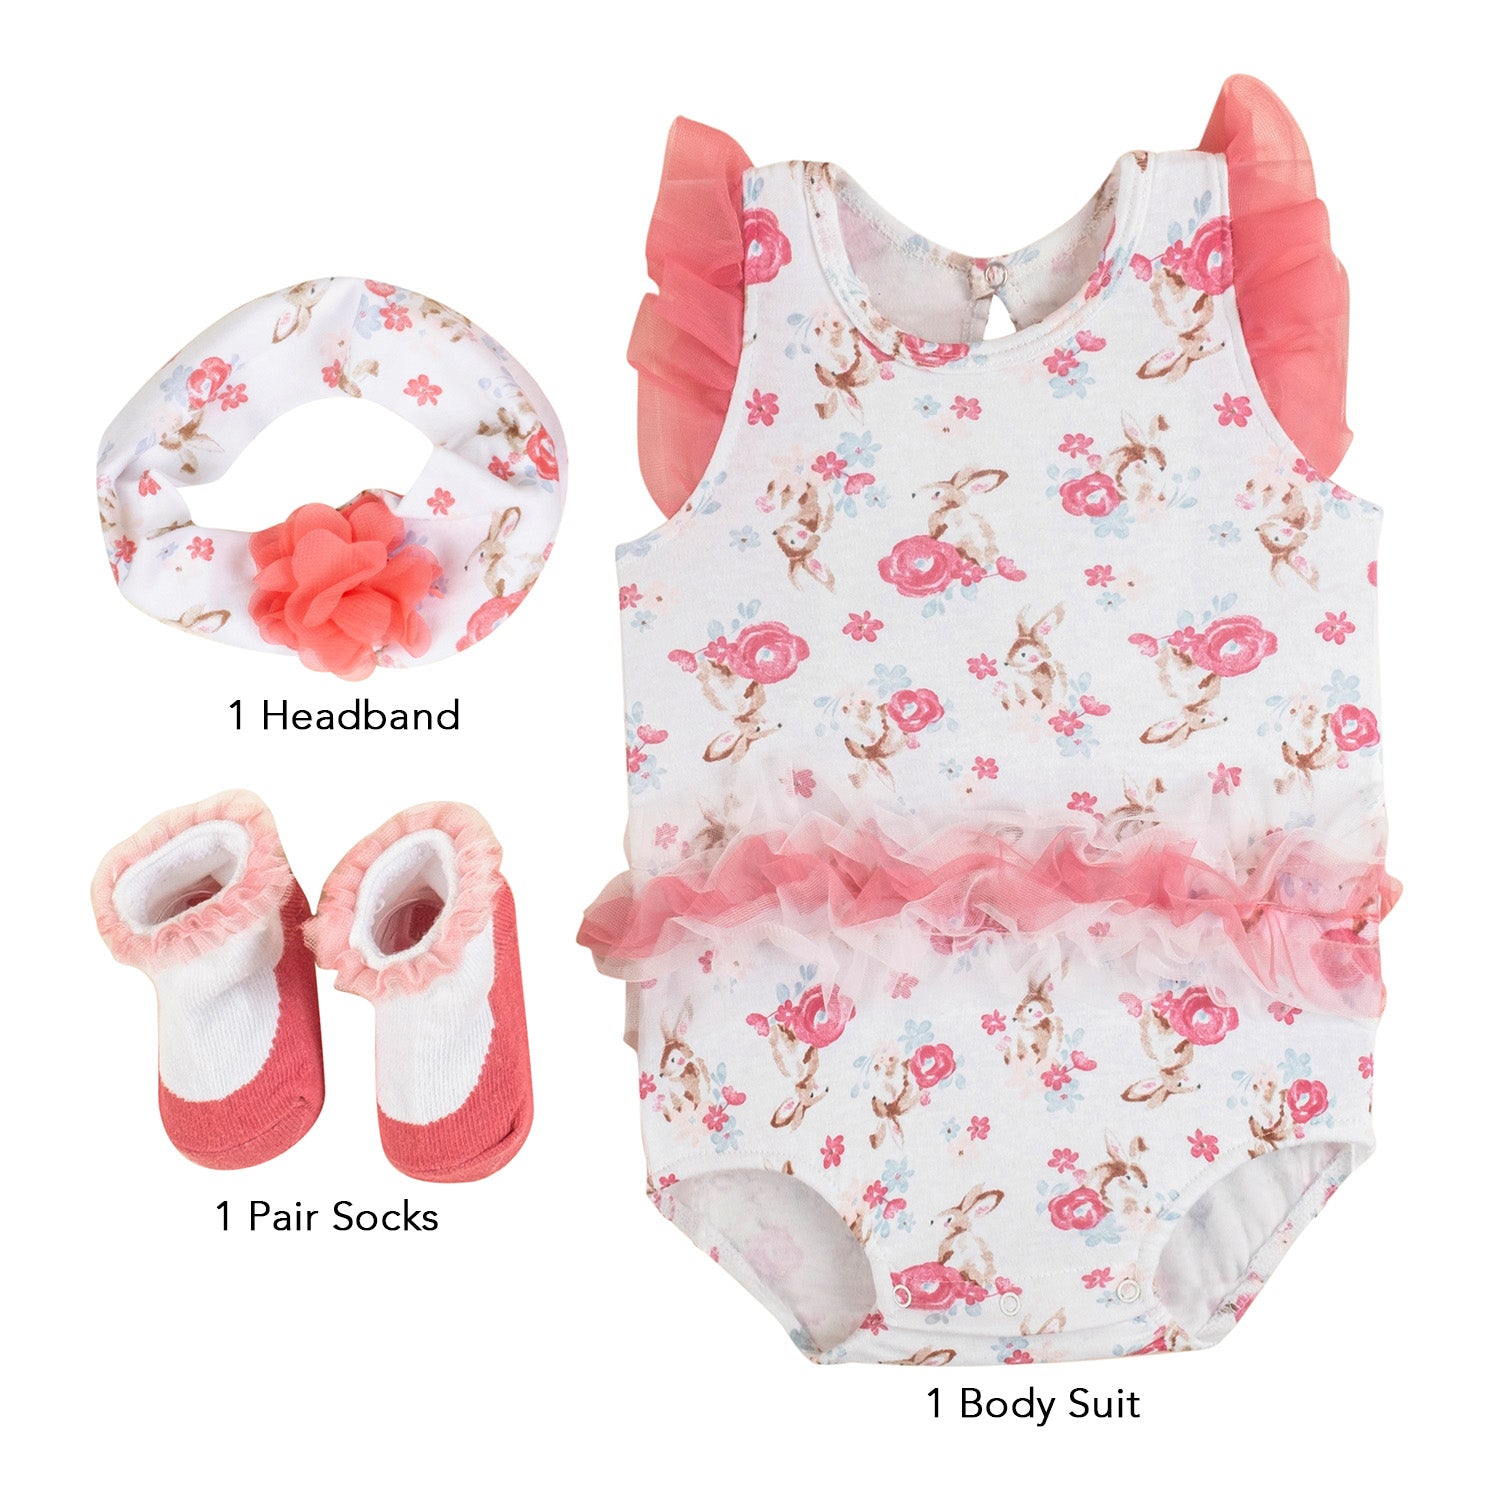 Baby Moo Garden Gift Set 3 Piece With Bodysuit, Socks And Headband - Pink, White